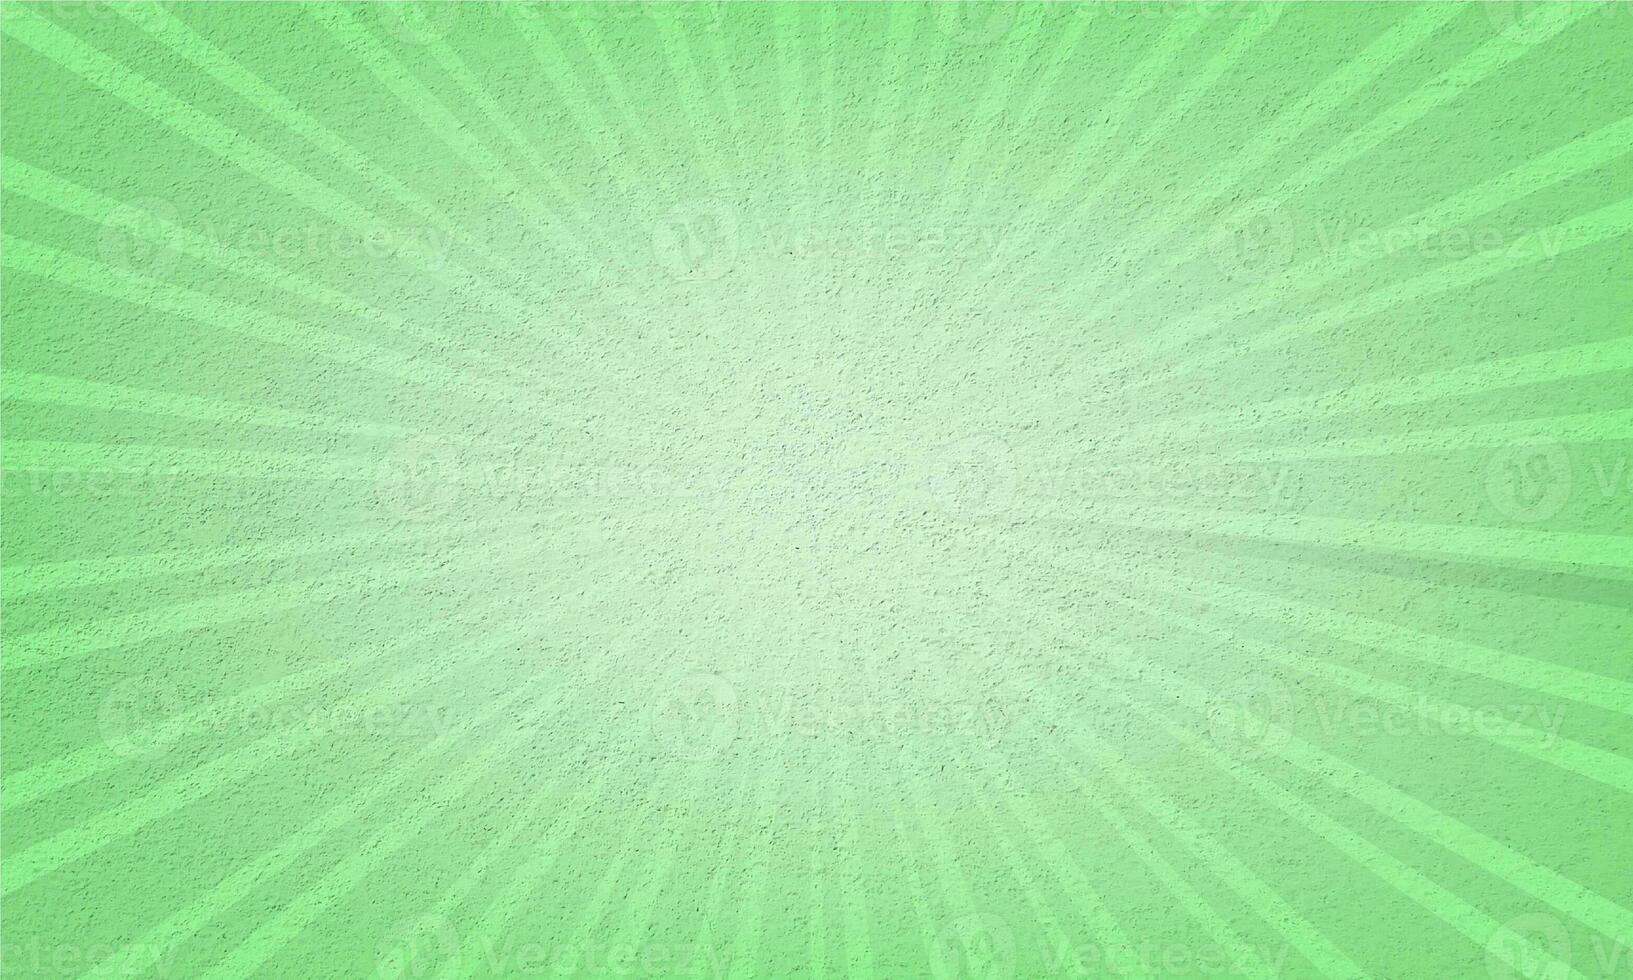 Pale green color sunburst background design photo